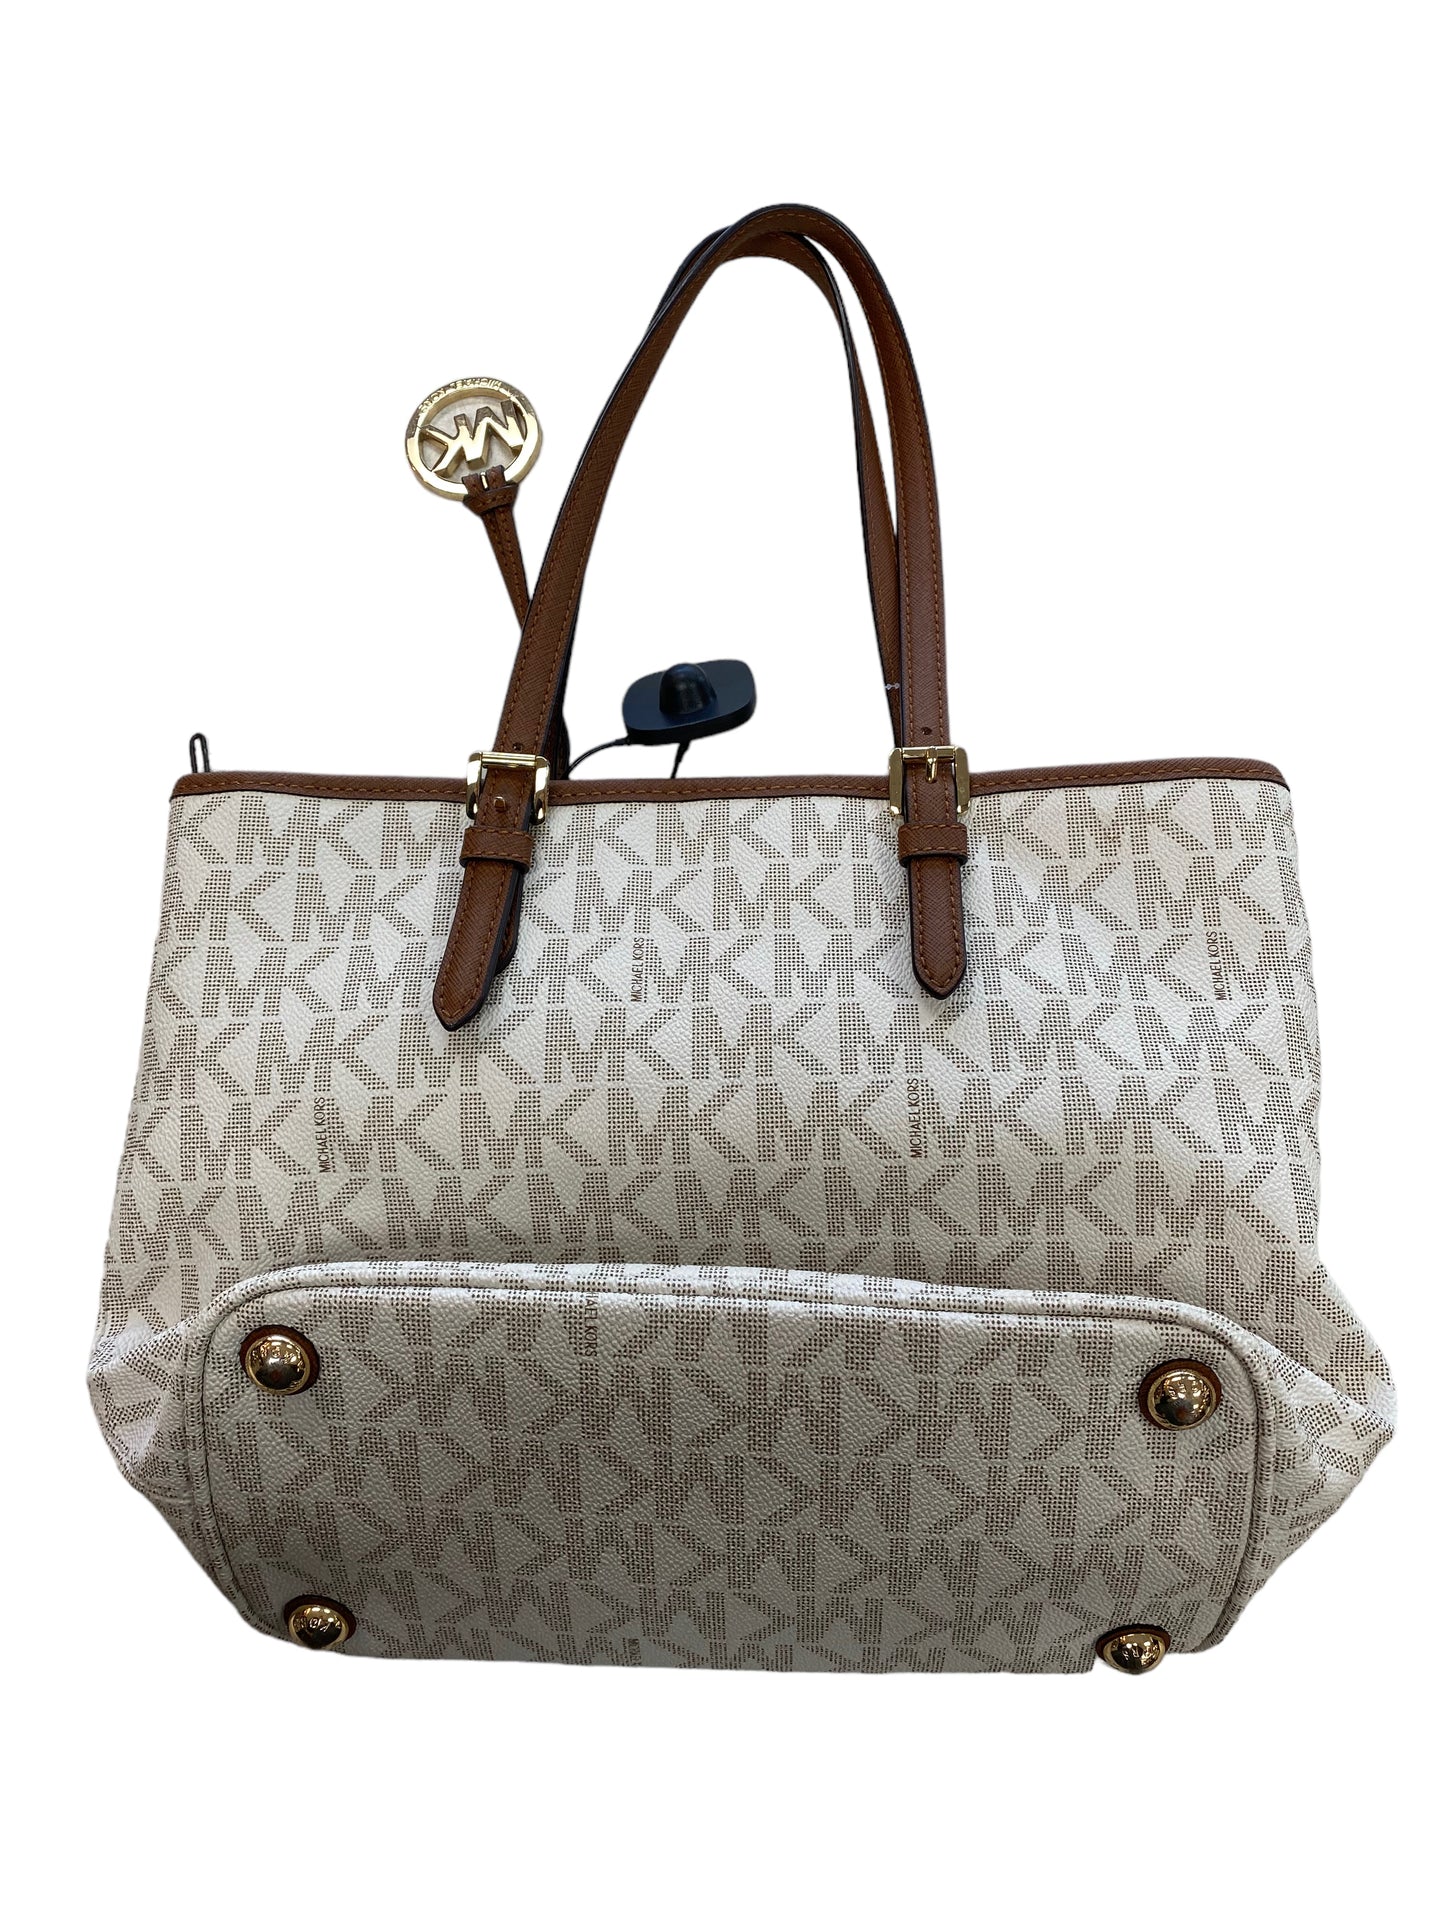 Handbag Designer Michael Kors, Size Small